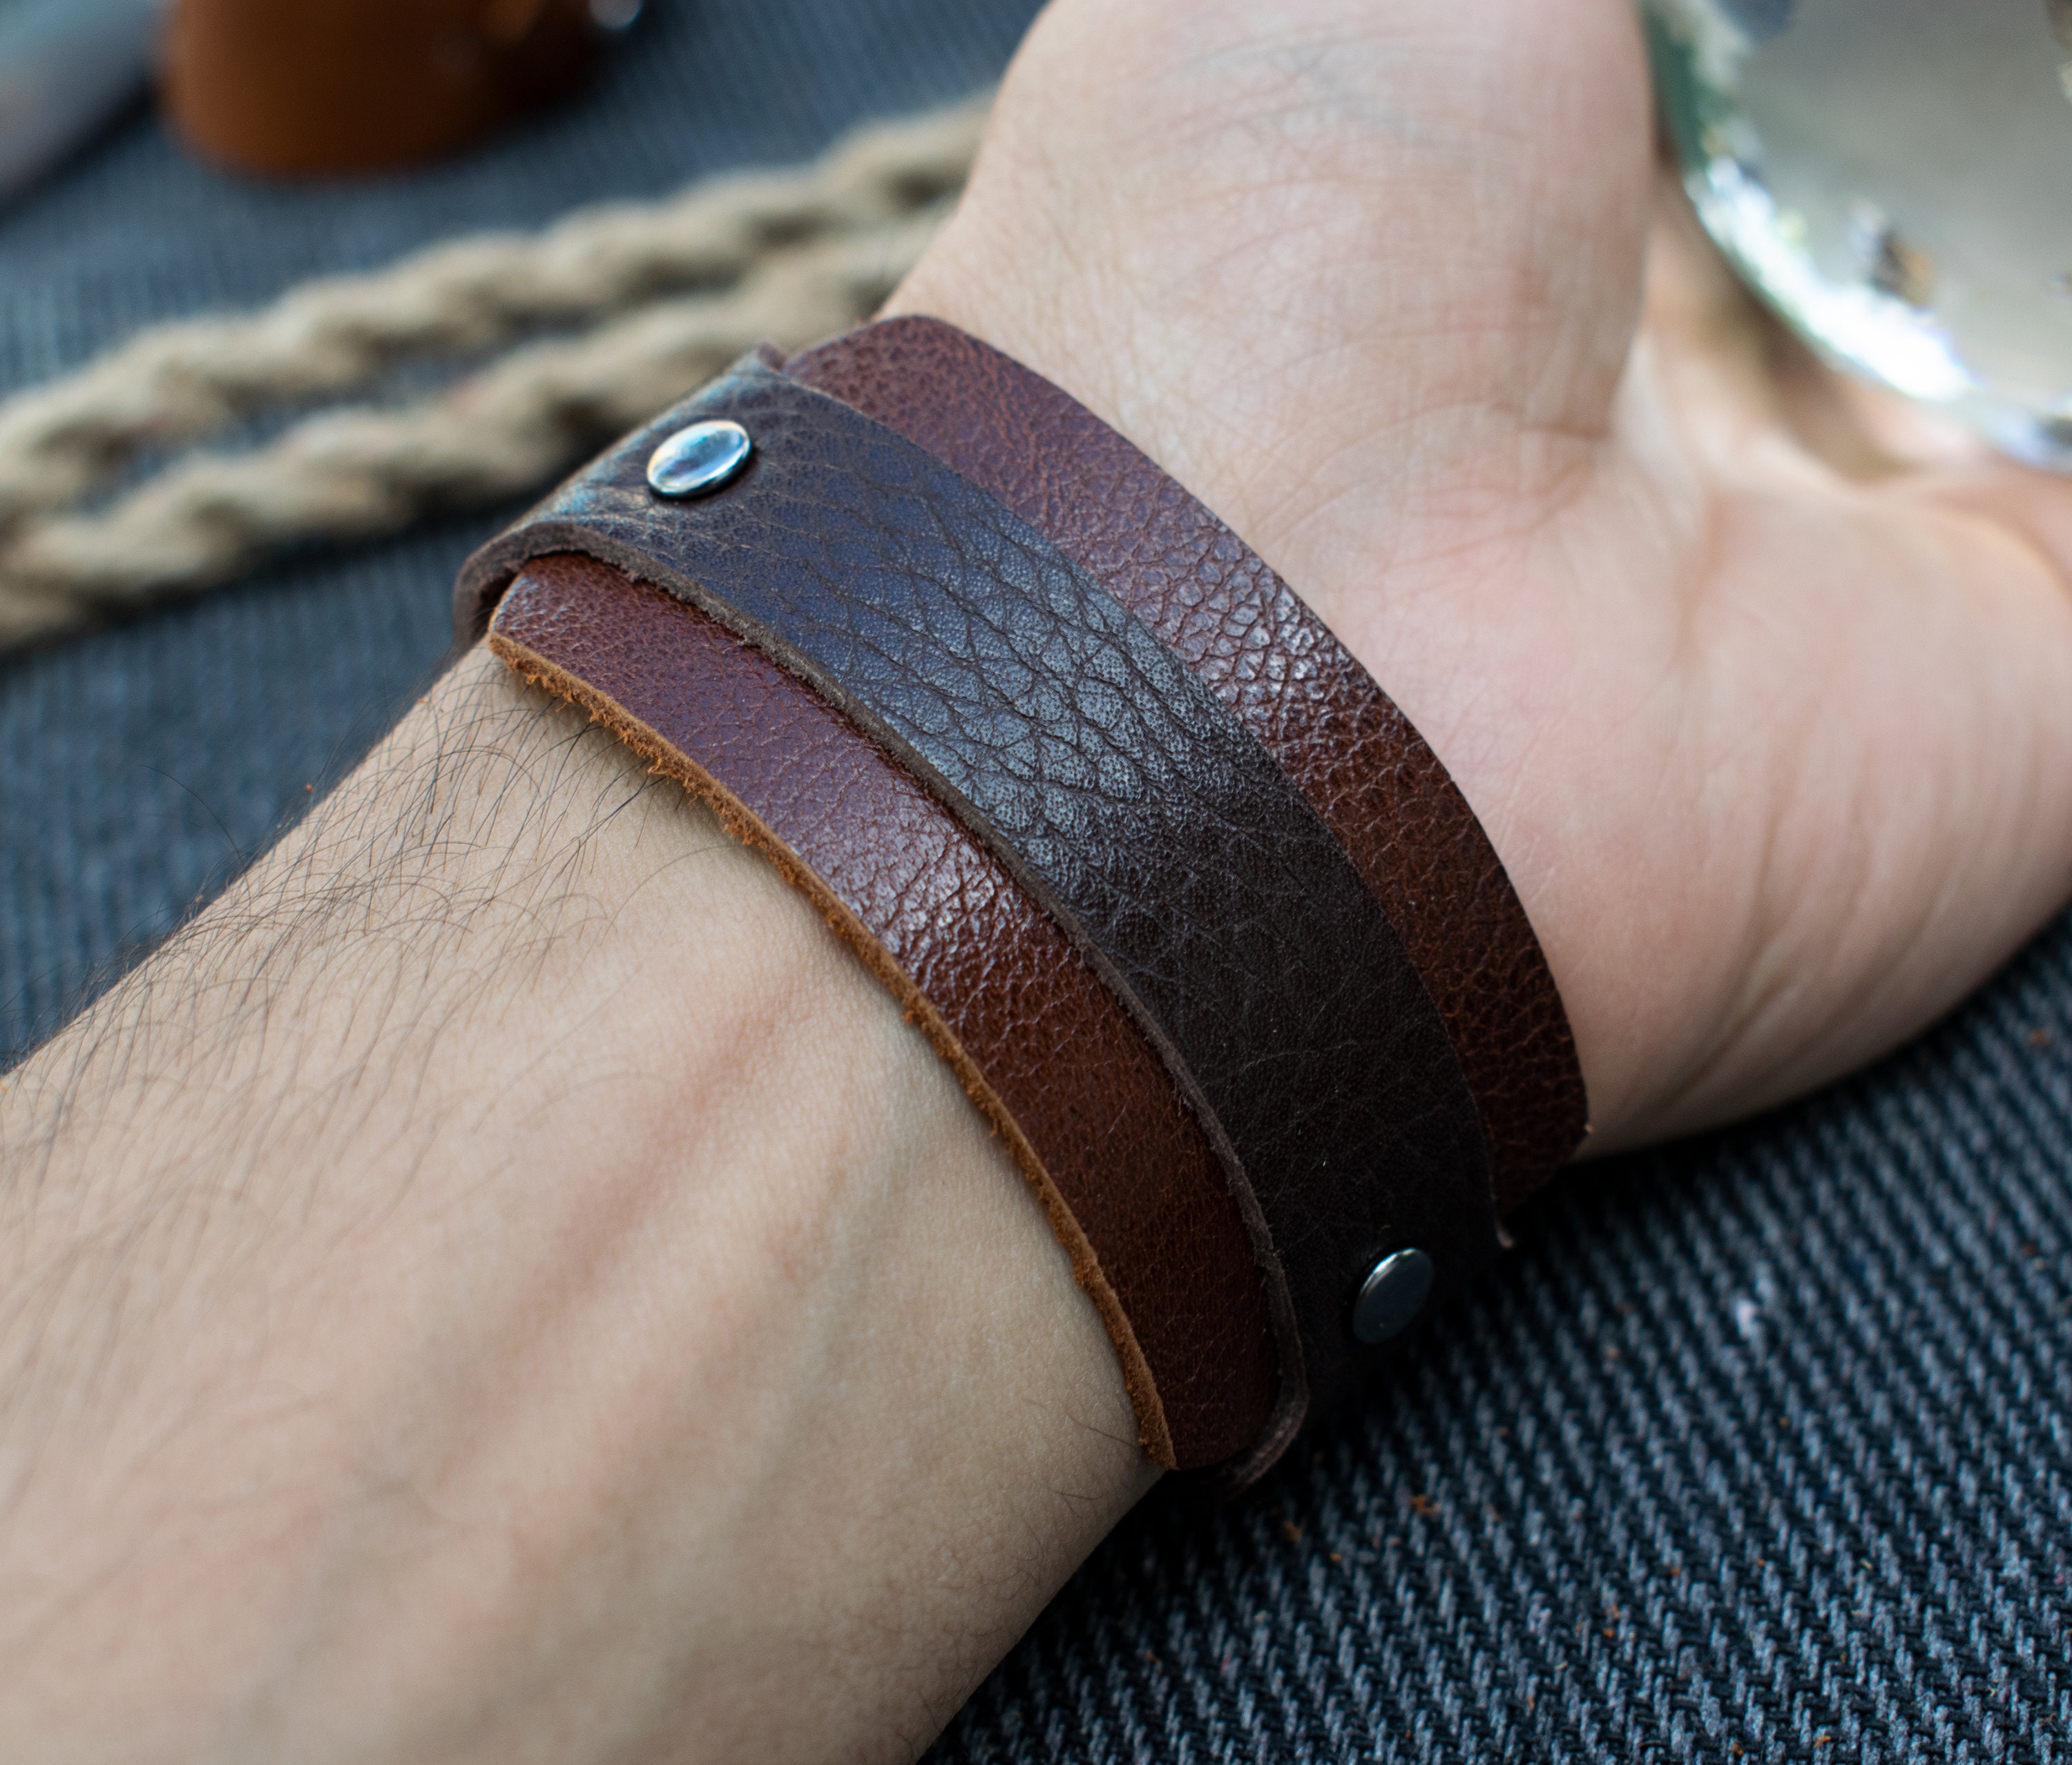 Personalized Leather Bracelet 